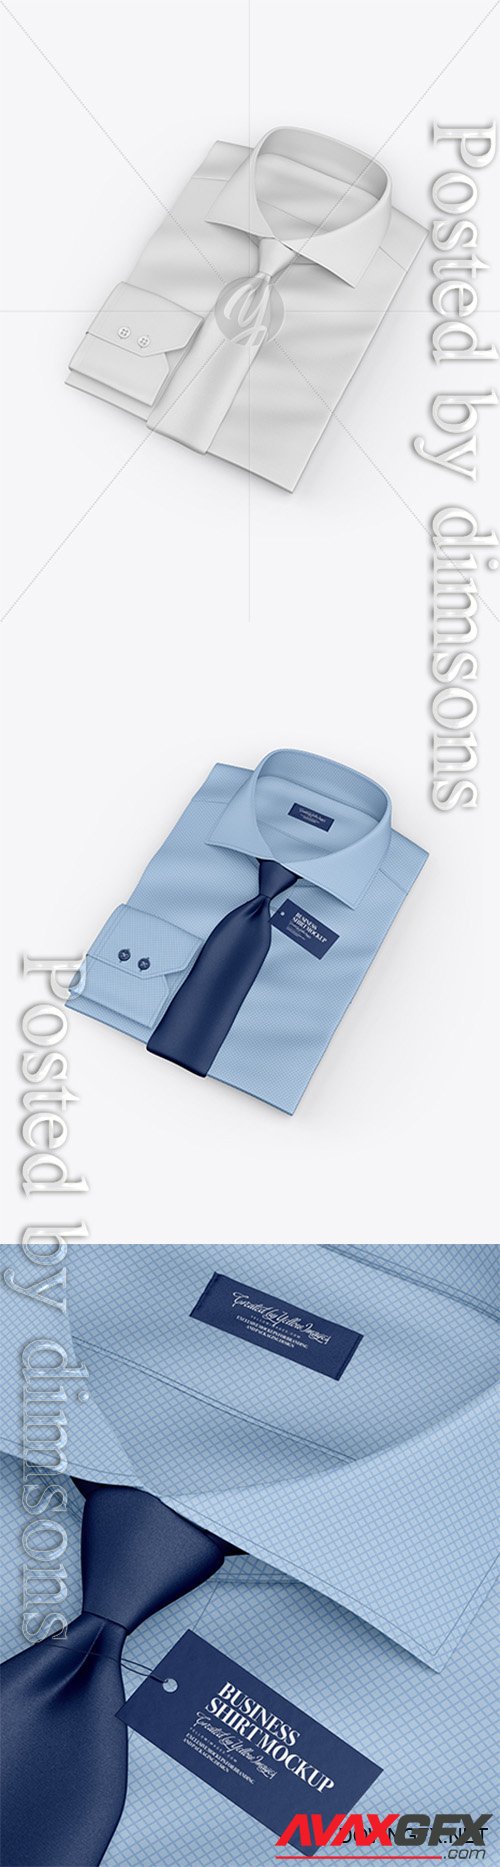 Folded Shirt With Tie Mockup - Half Side View (High-Angle Shot) 25072 TIF